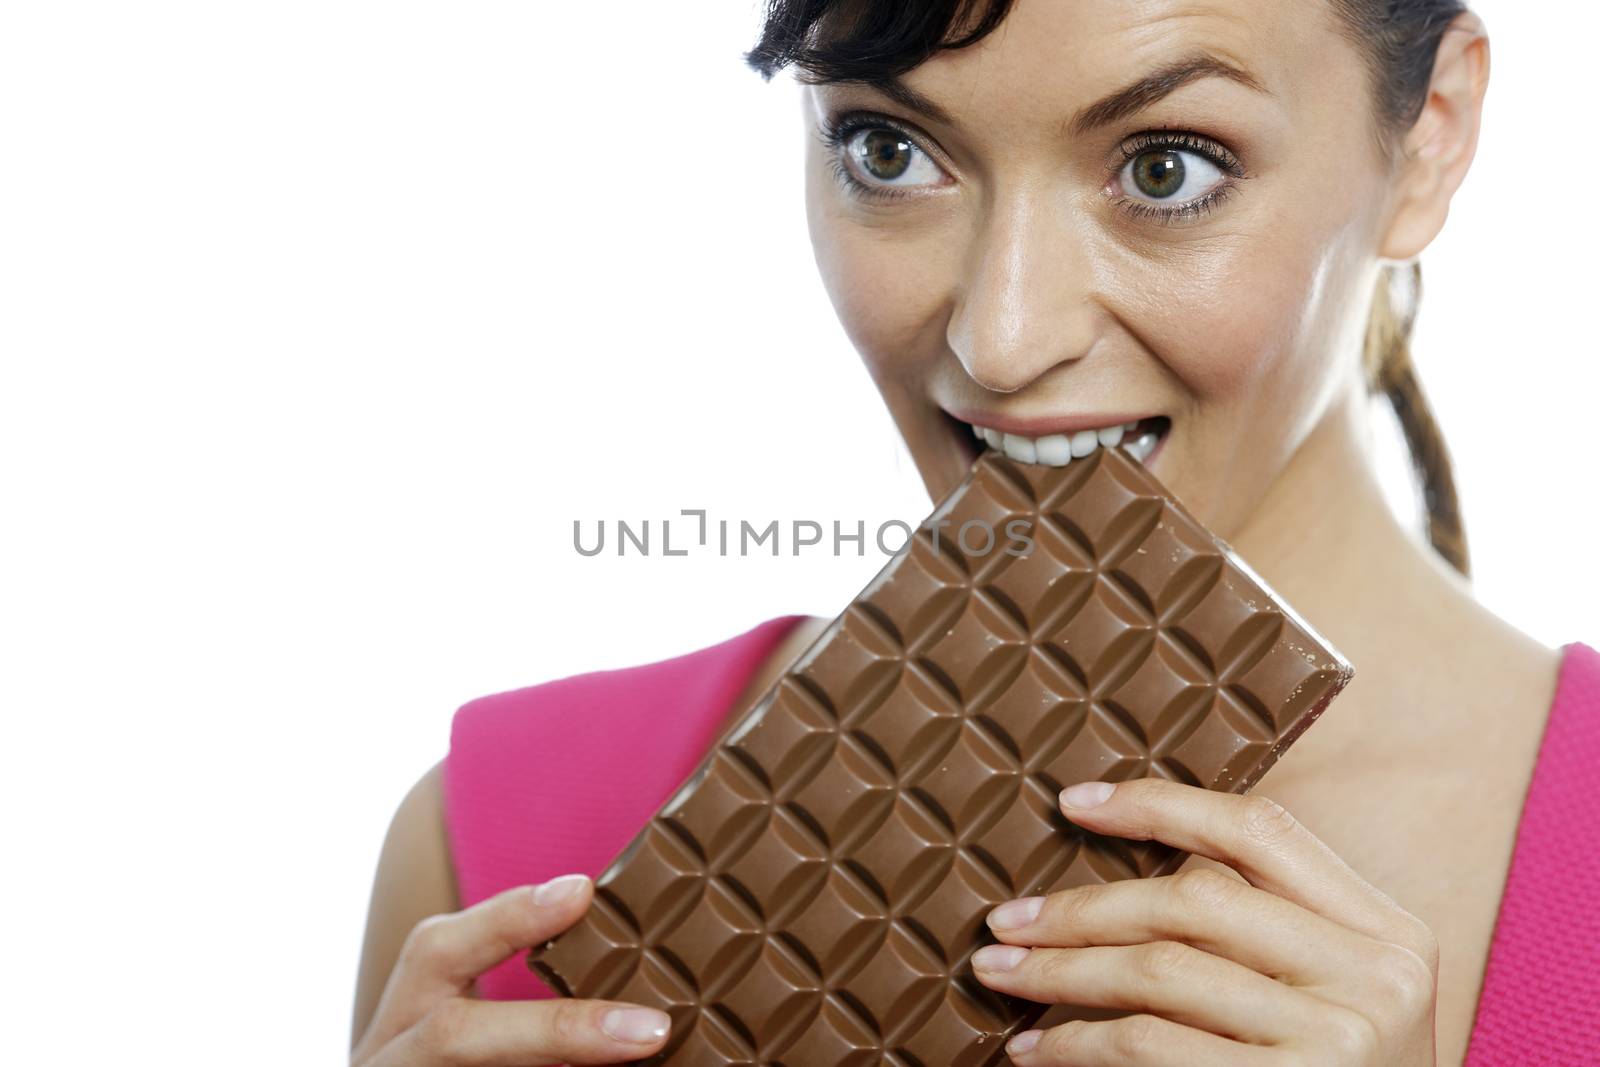 Young woman eating a huge chocolate bar